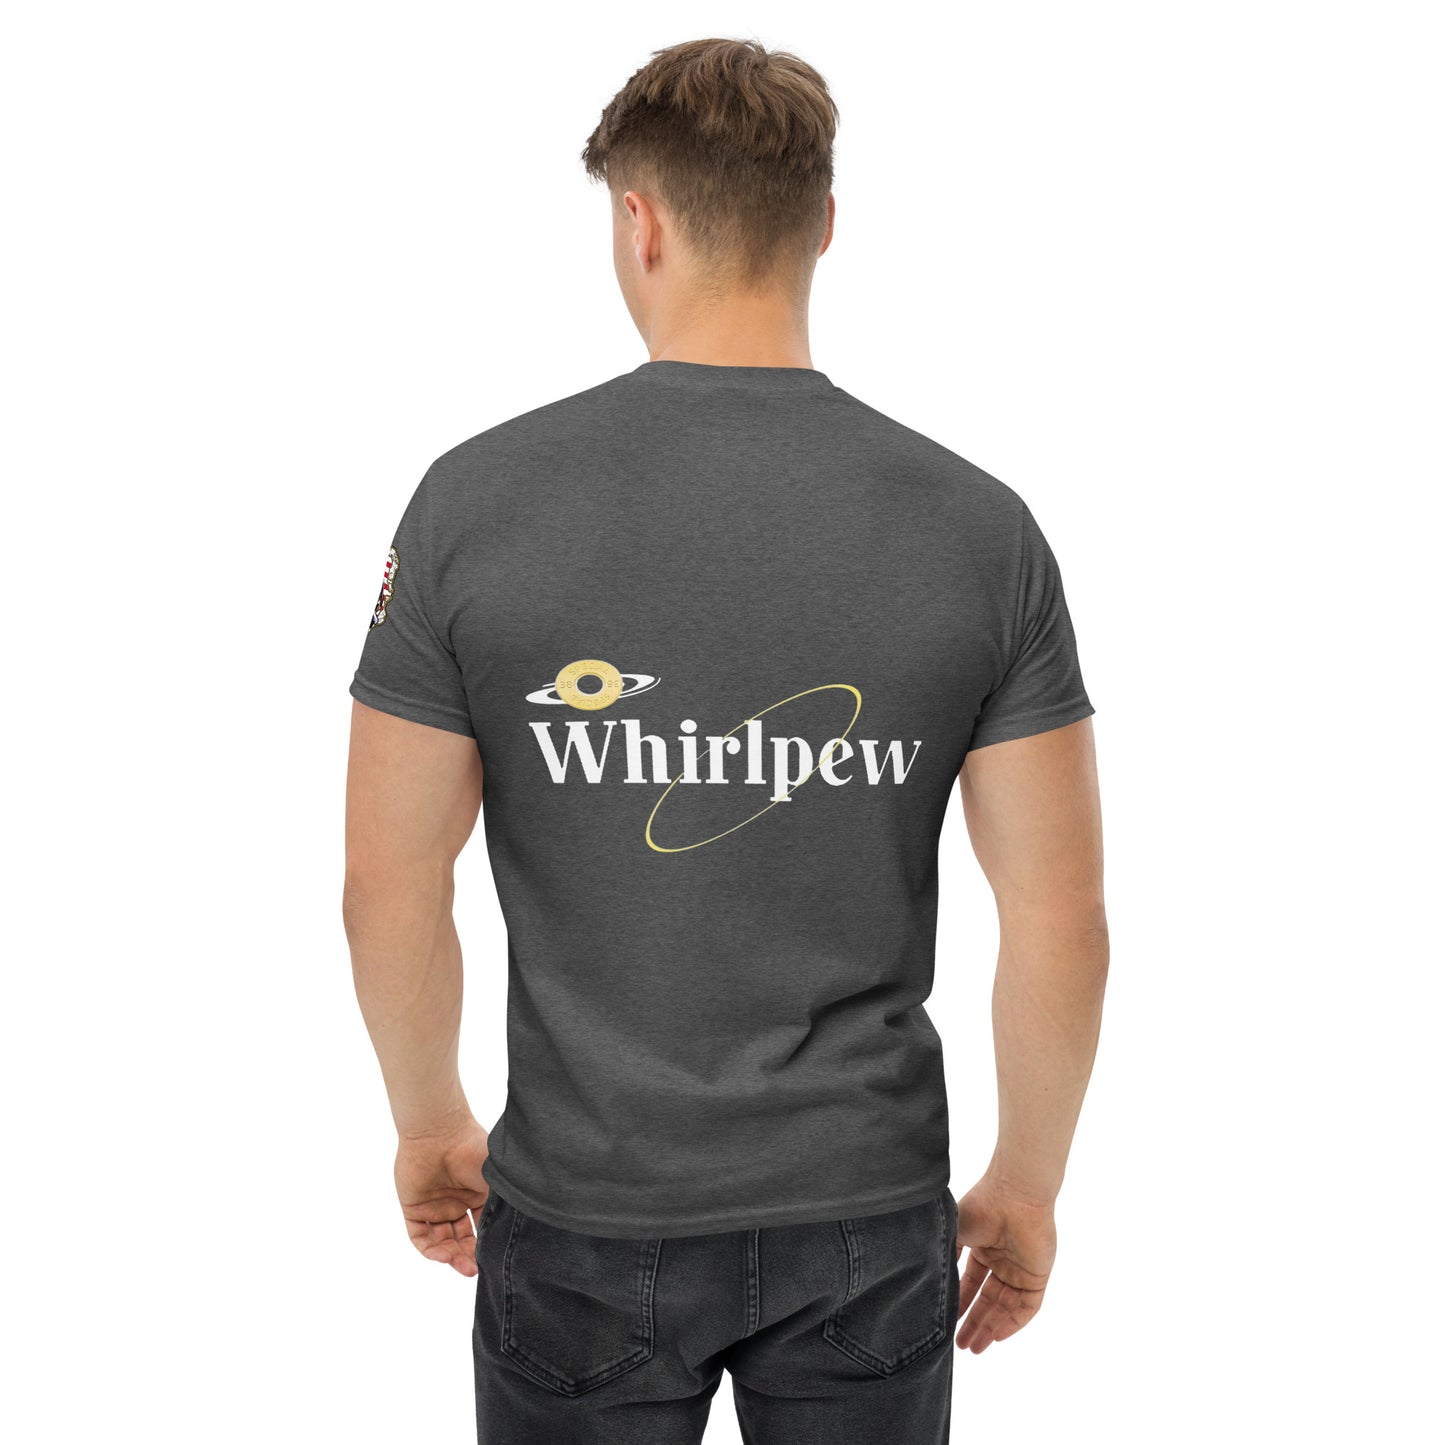 Whirlpew- Whirlpool Parody